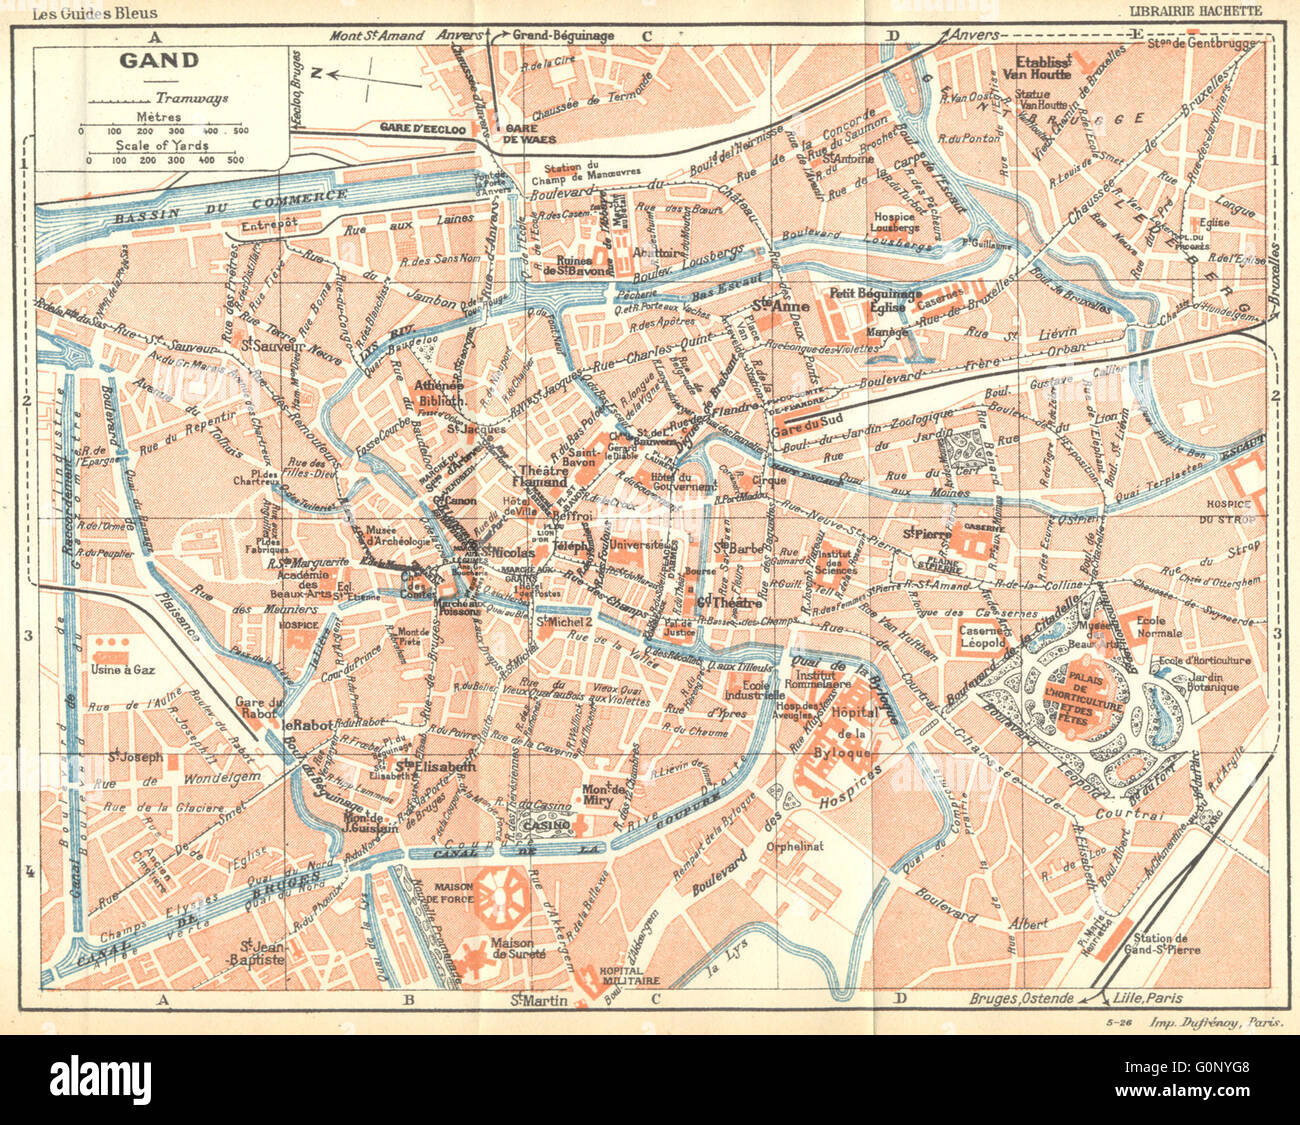 gand belgique carte Belgium Ghent Gand Town City Ville Plan Carte Map 1924 Stock Photo Alamy gand belgique carte